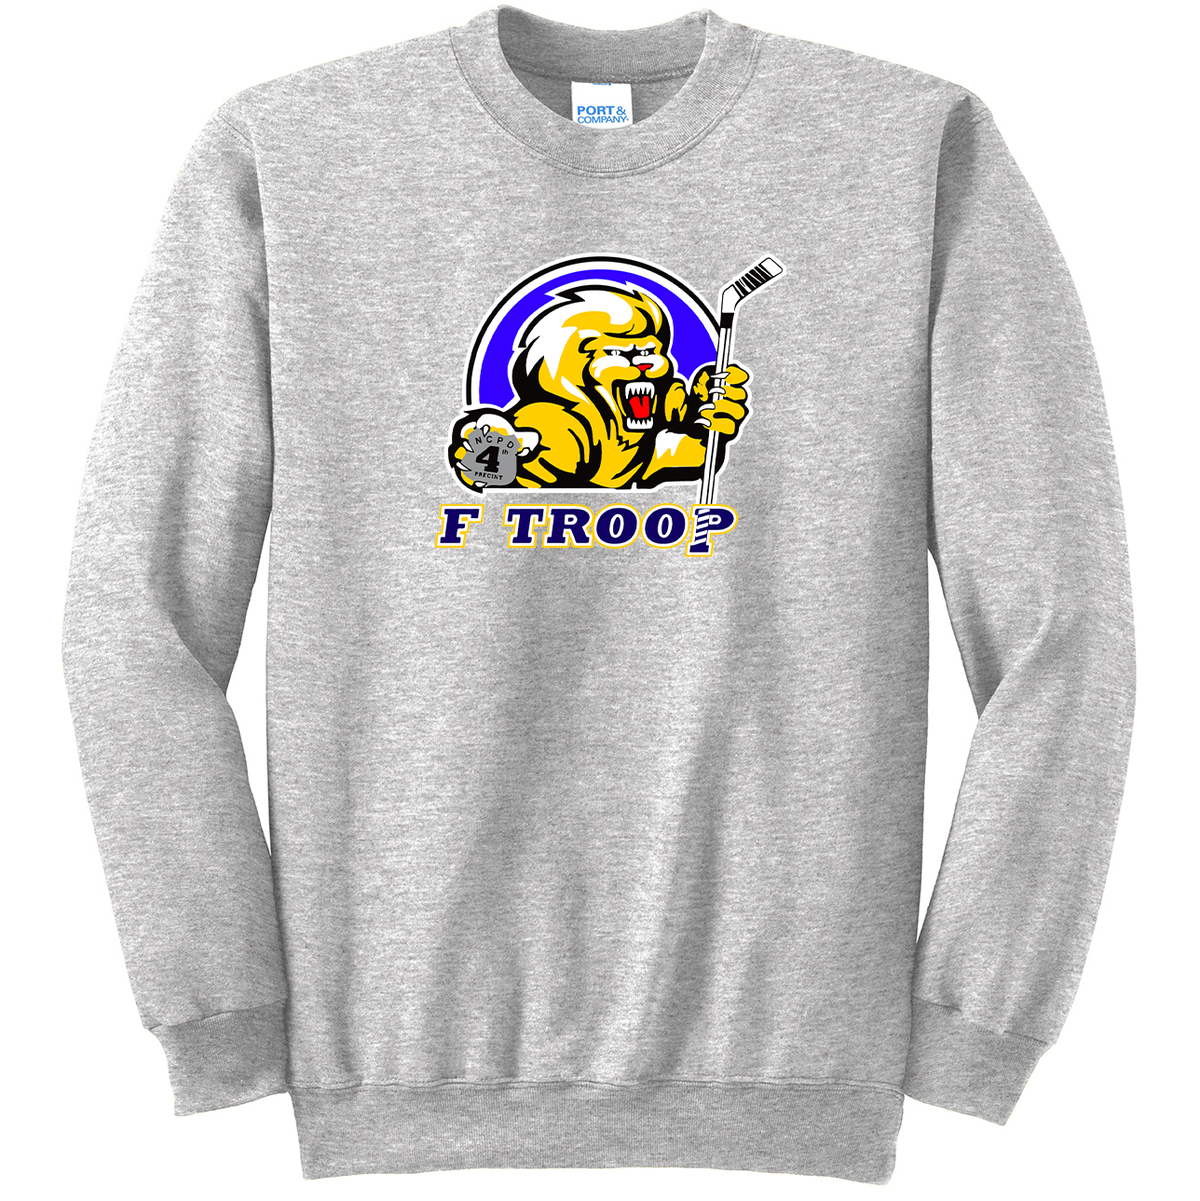 F Troop Hockey Crew Neck Sweater